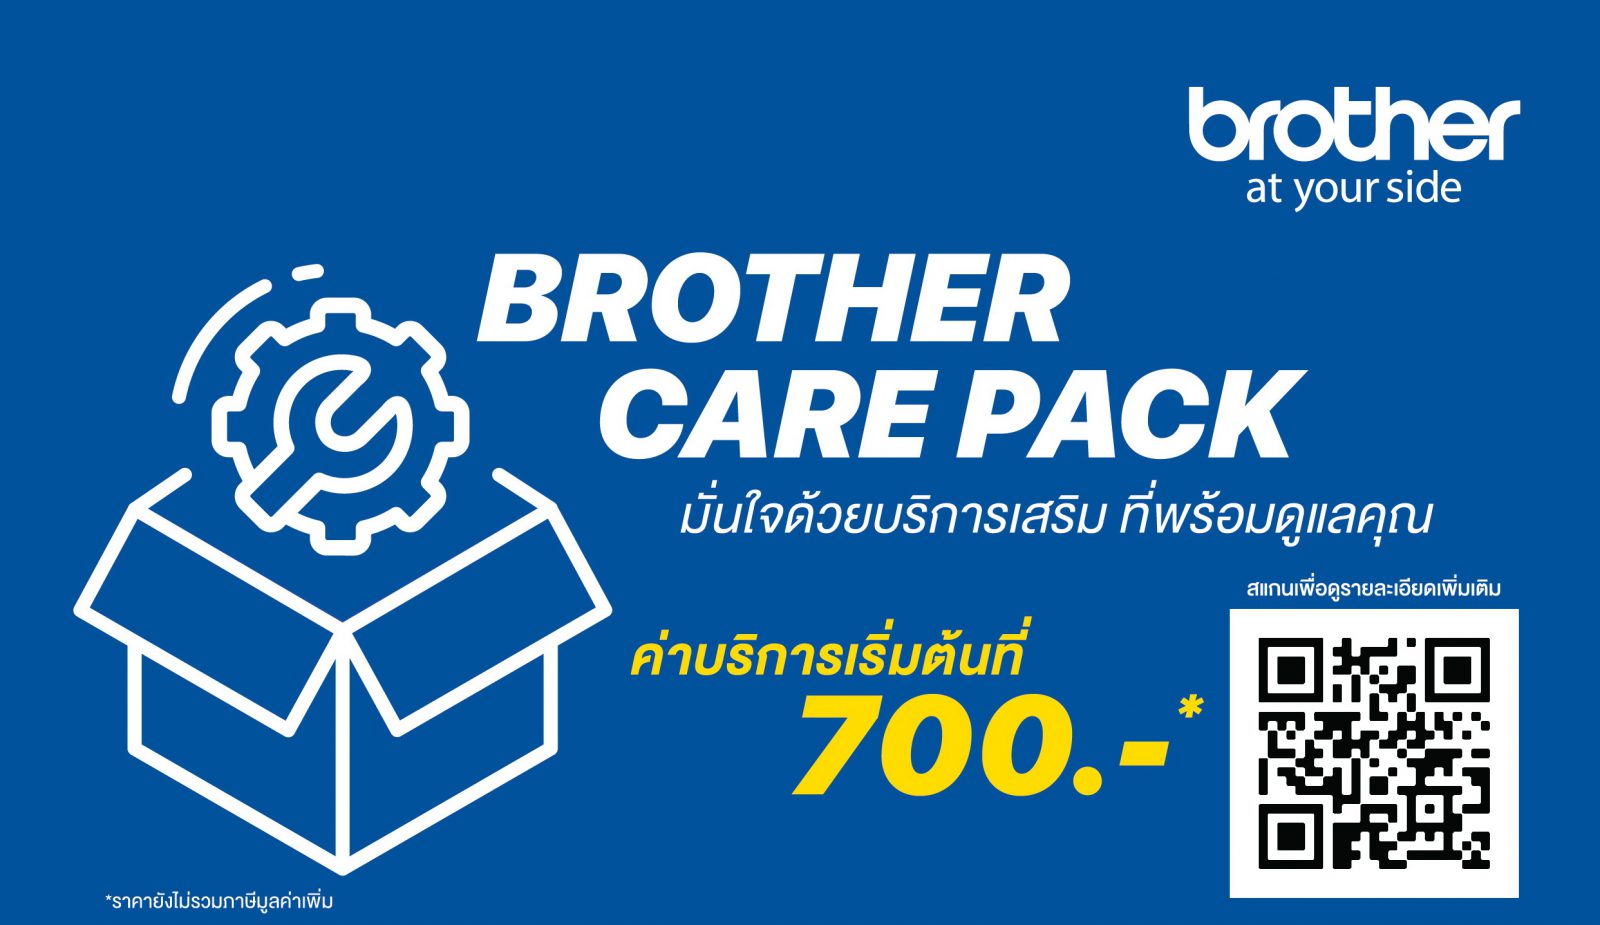 AW Brethercarepack 1 | Brother Care Pack | บราเดอร์ เปิดตัว ‘Brother Care Pack’ บริการเสริมพร้อมดูแลหลังการขาย